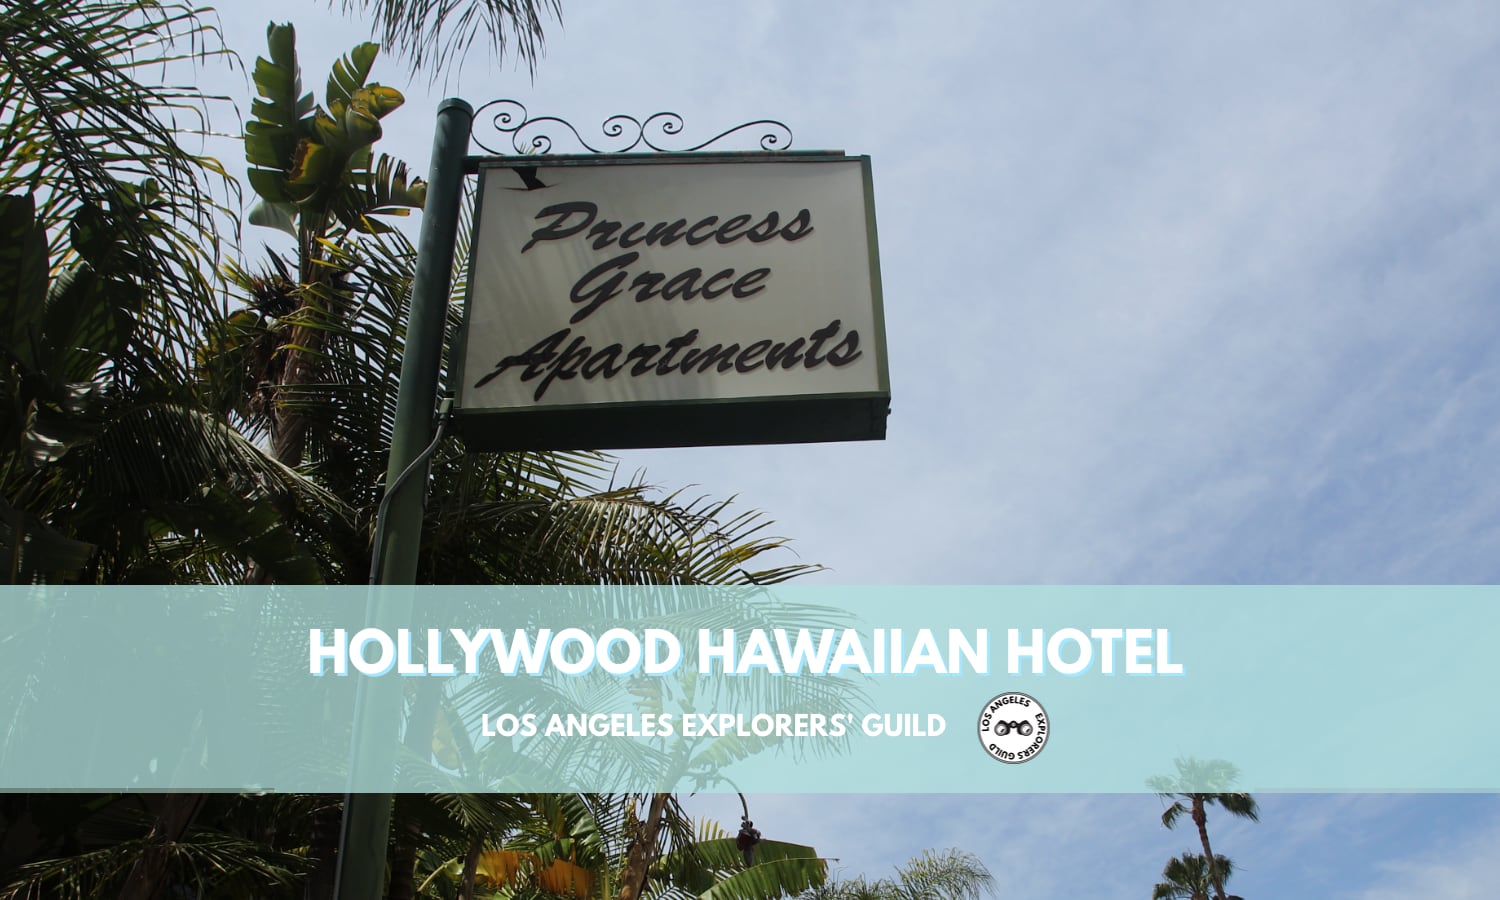 The Hollywood Hawaiian Hotel Today